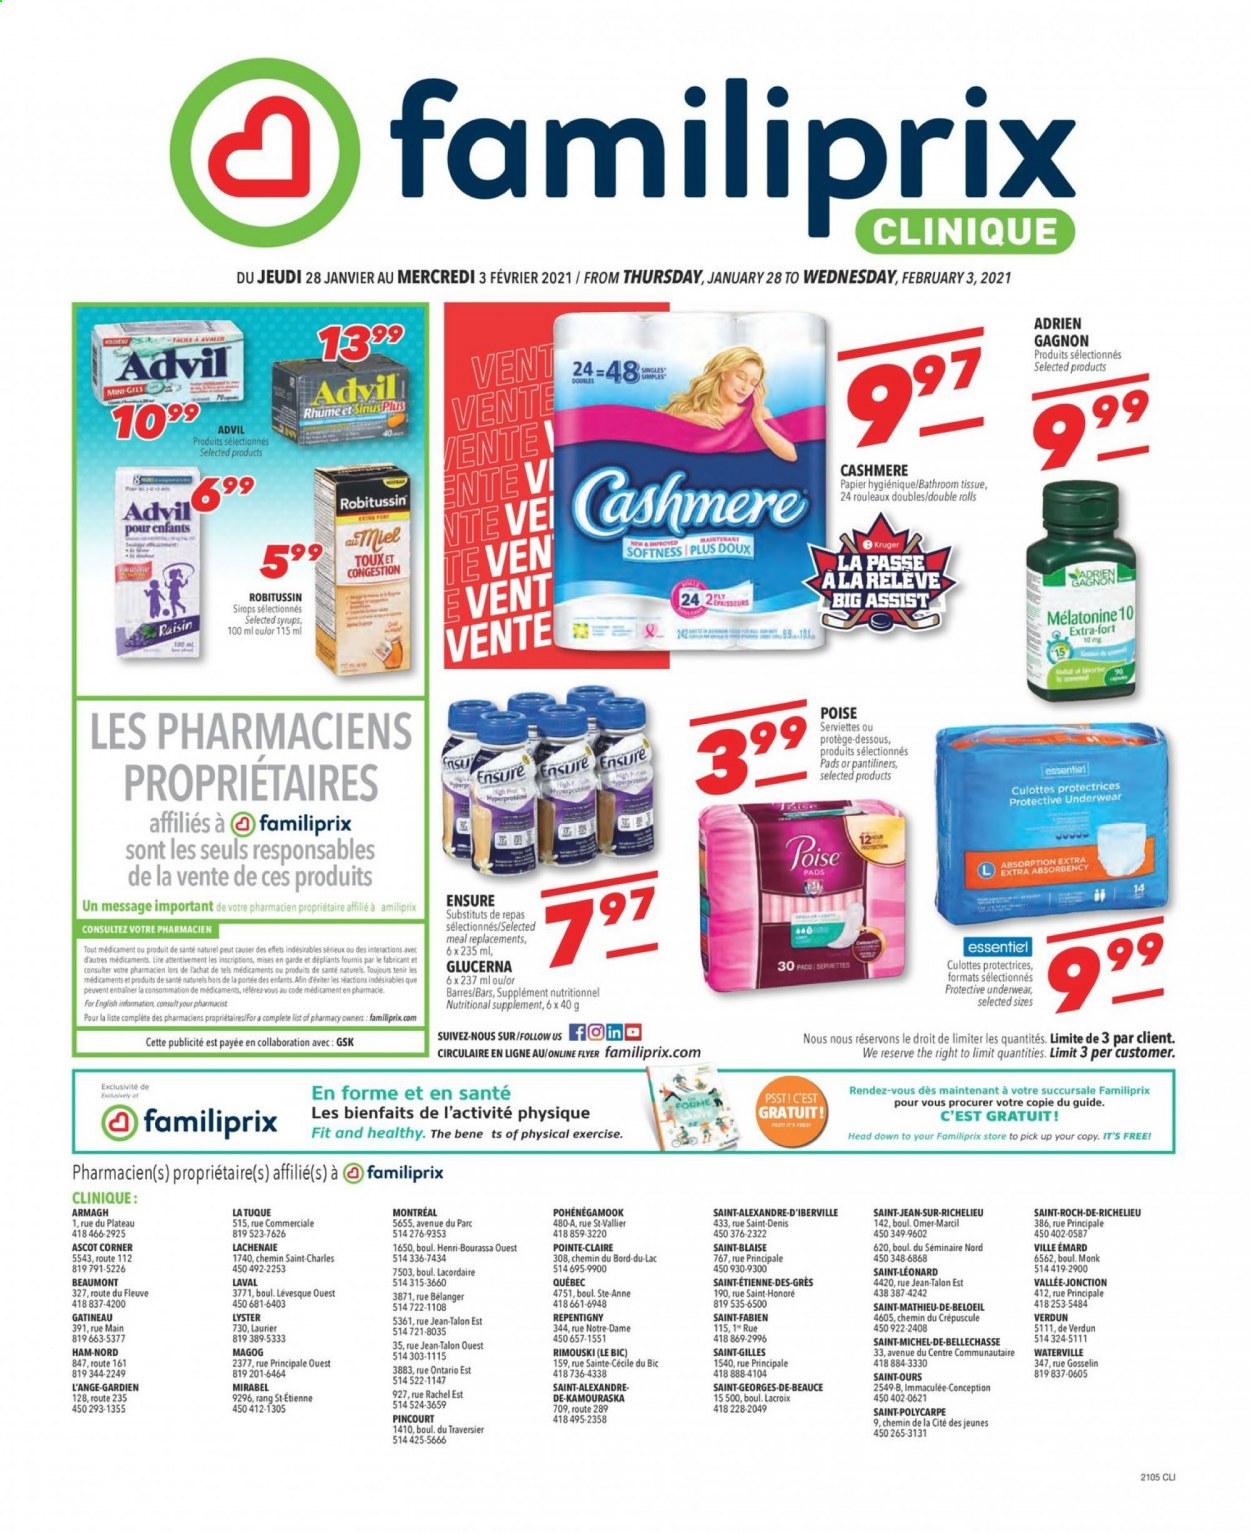 thumbnail - Familiprix Clinique Flyer - January 28, 2021 - February 03, 2021 - Sales products - bath tissue, pantiliners, Clinique, BIC, Glucerna, Advil Rapid, nutritional supplement, Robitussin. Page 1.